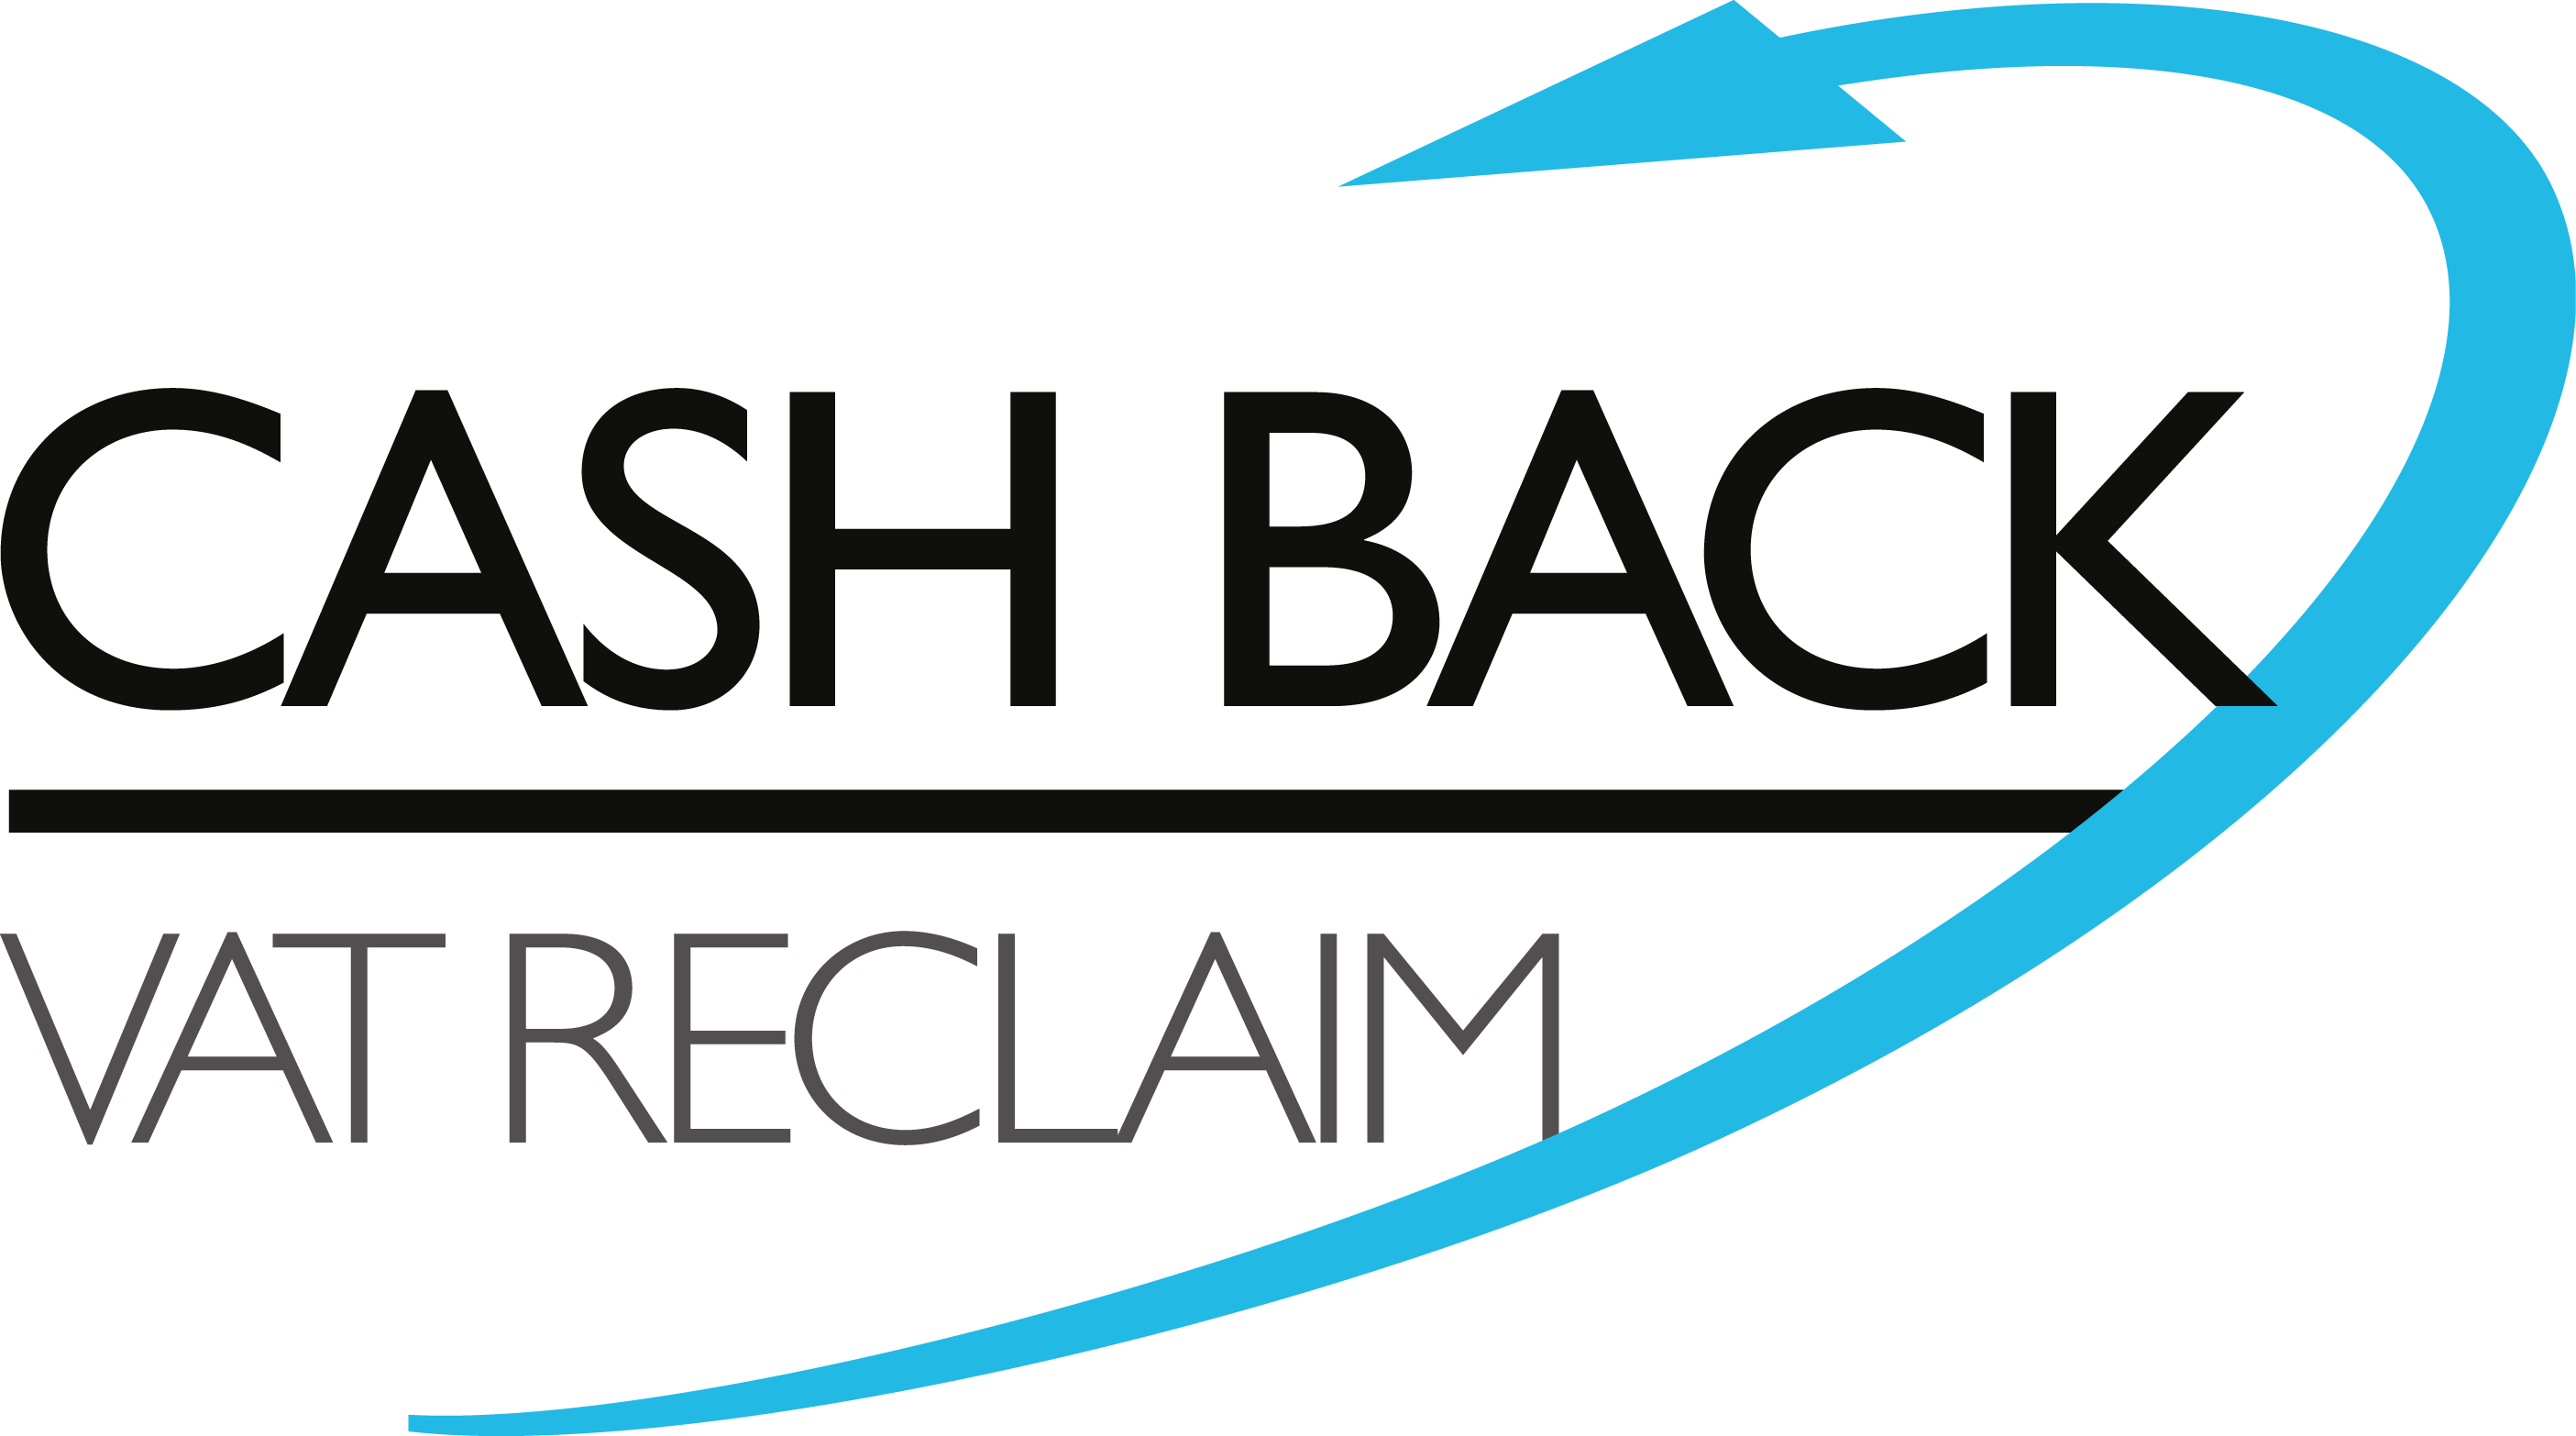 Reclaim Logo - Cash Back Vat Reclaim Integration. Claims Software Made Easy